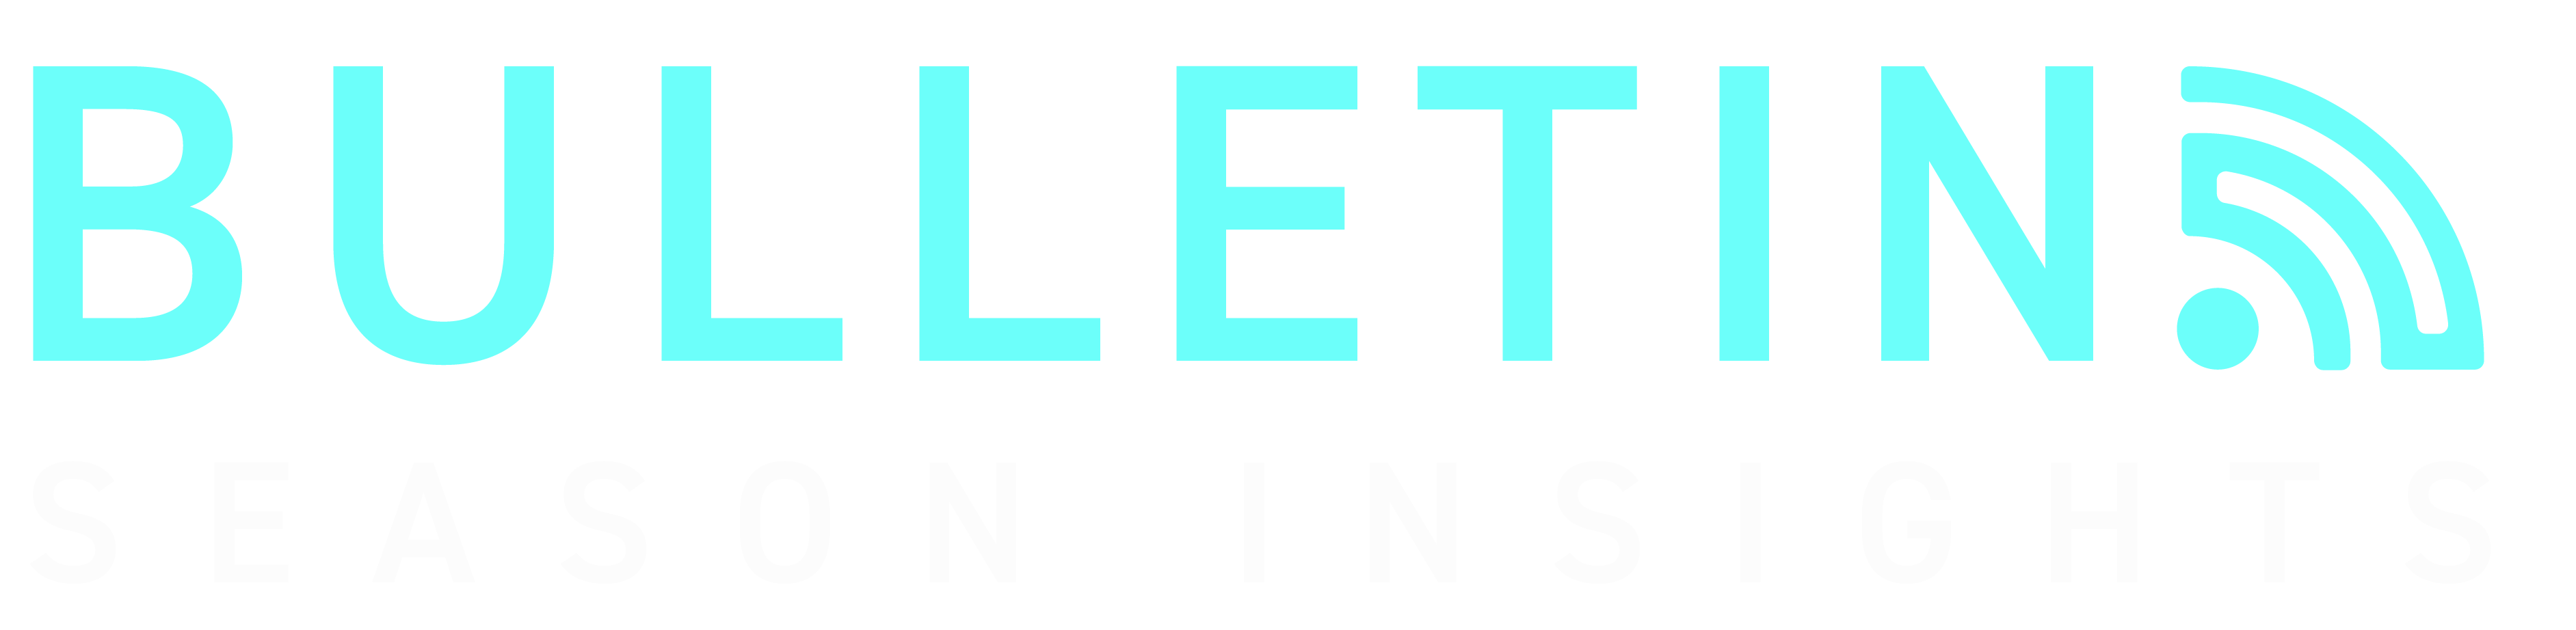 Bulletin Season Insights Logo